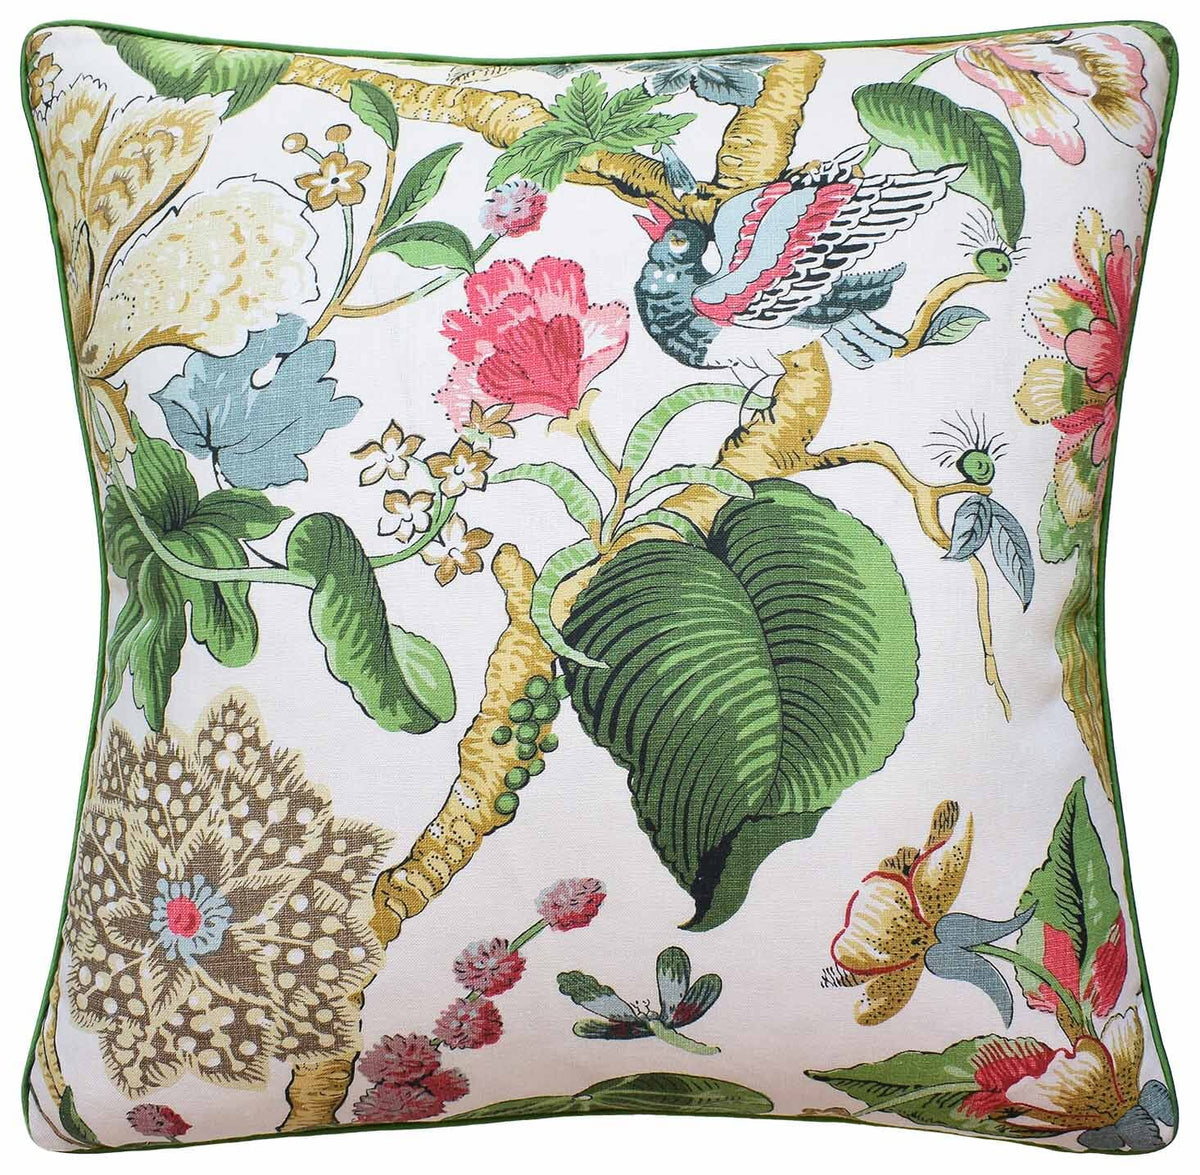 Hill Garden Coral Green Throw Pillow by Ryan Studio - Thibaut Fabrics Grand Palace